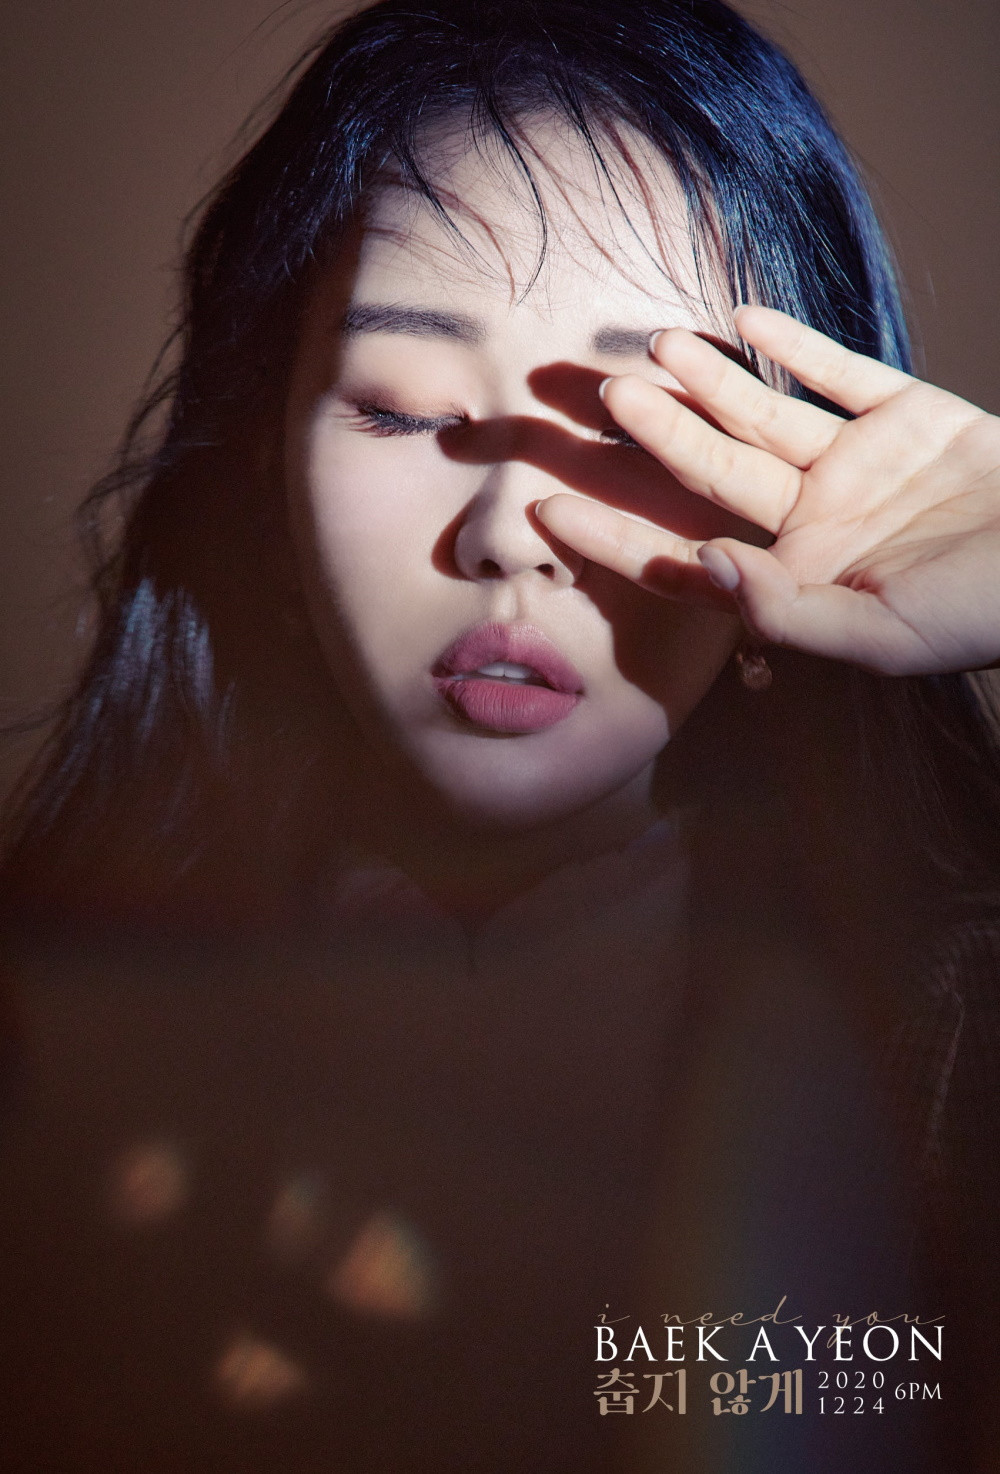 [Камбэк] Пэк А Ён "I Need You": новые концепт фото-тизеры